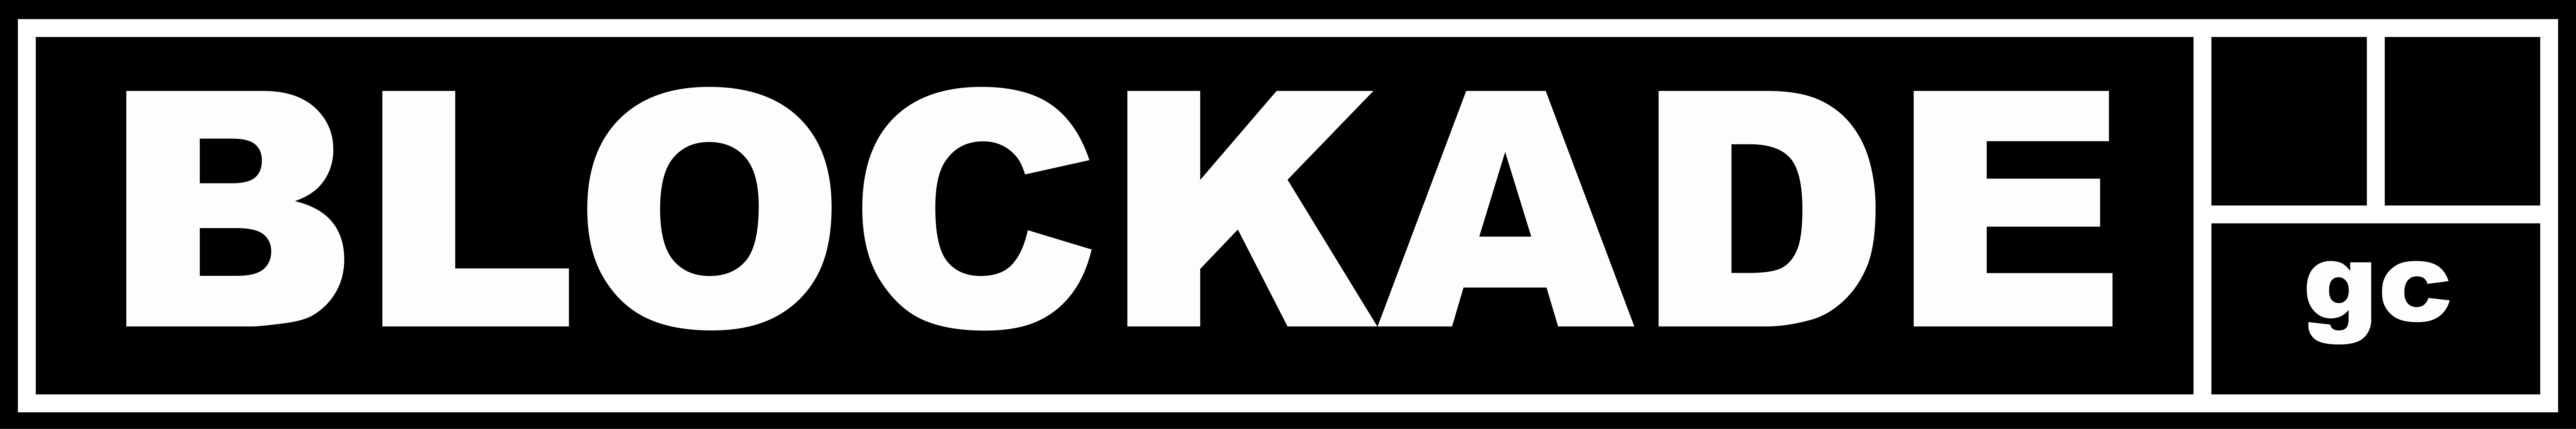 Blockade General Contracting logo